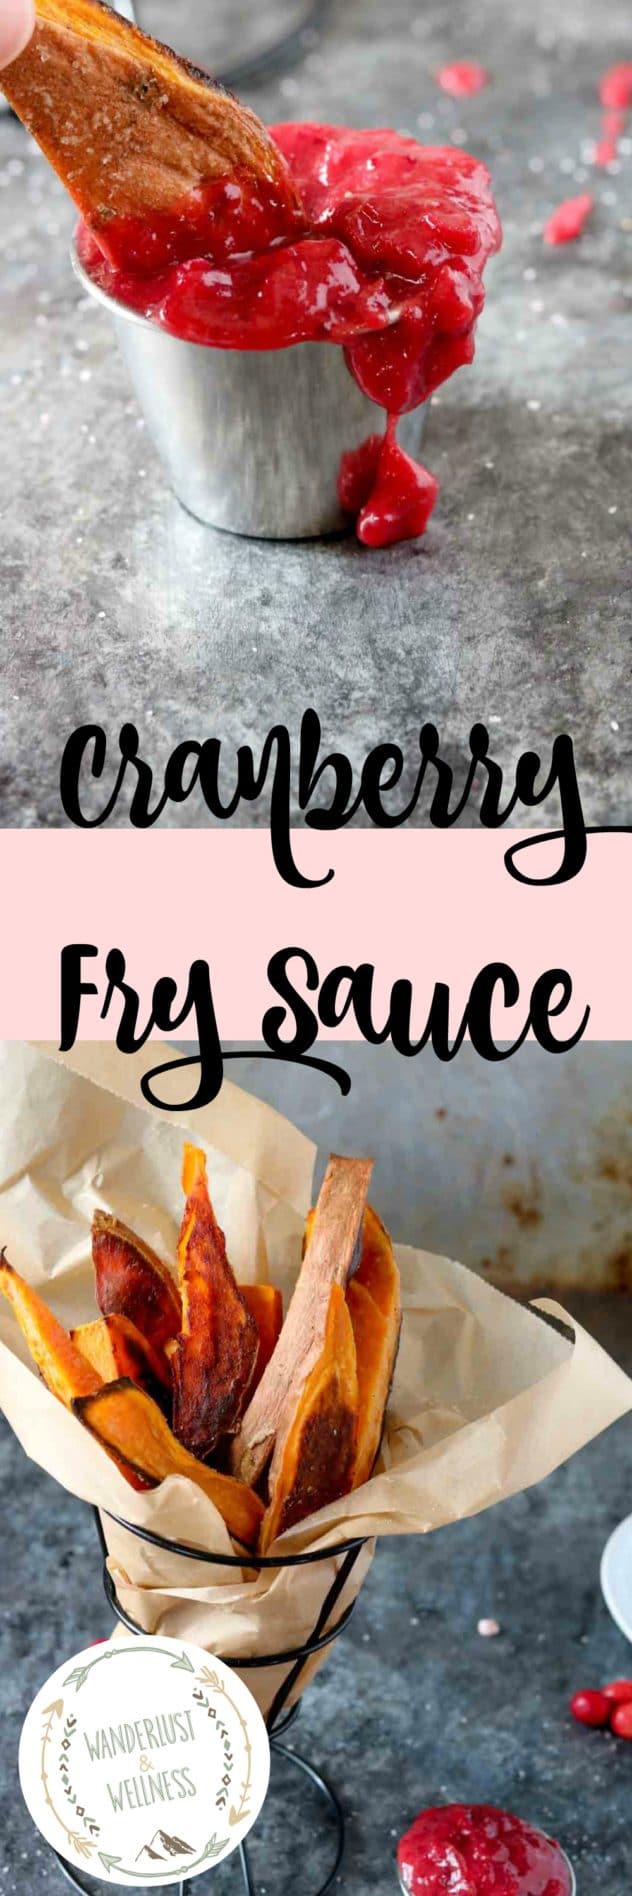 Cranberry Fry Sauce